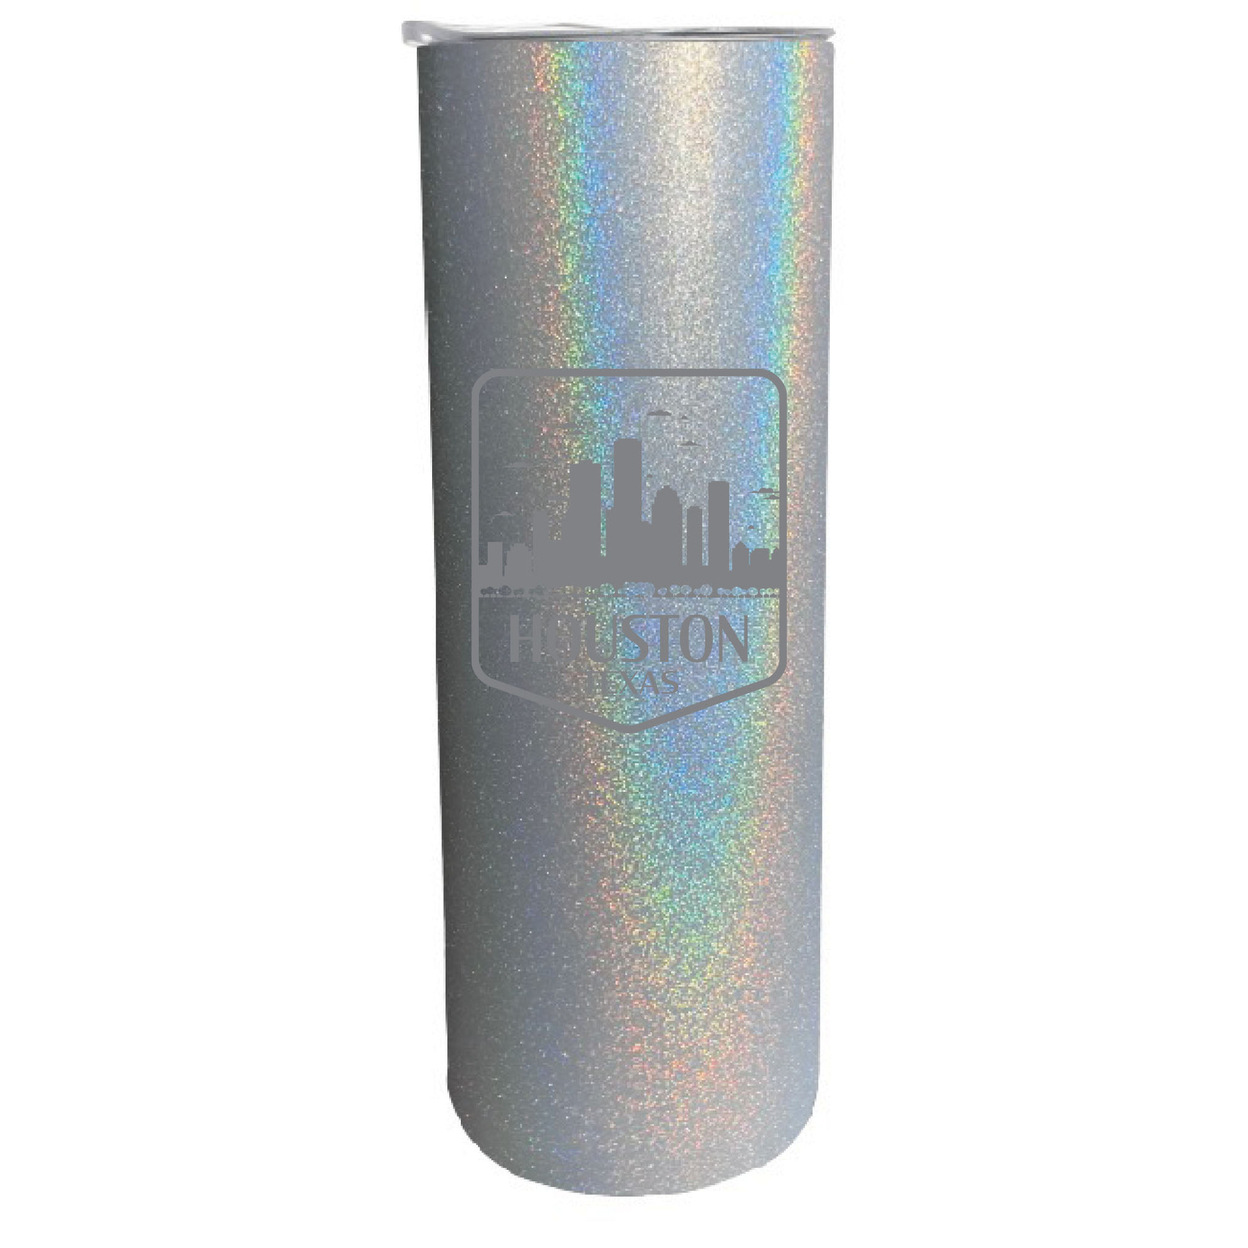 Houston Texas Souvenir 20 Oz Engraved Insulated Stainless Steel Skinny Tumbler - Gray Glitter,,Single Unit